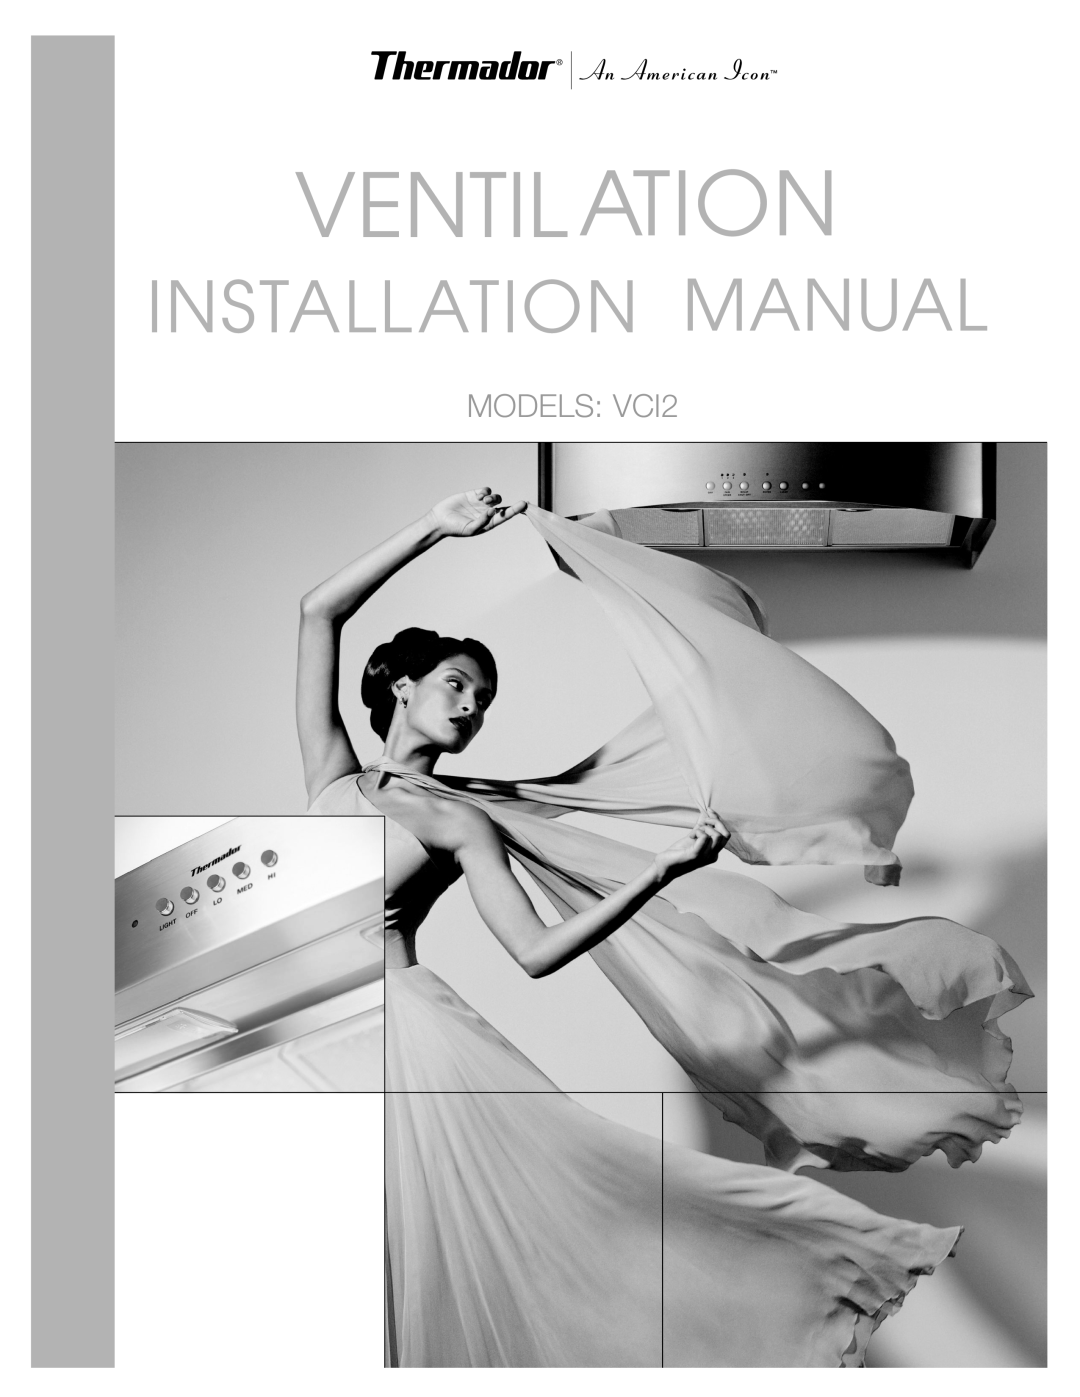 Thermador installation manual Ventil Ation, Installation Manual, MODELS CVS2VCI2 